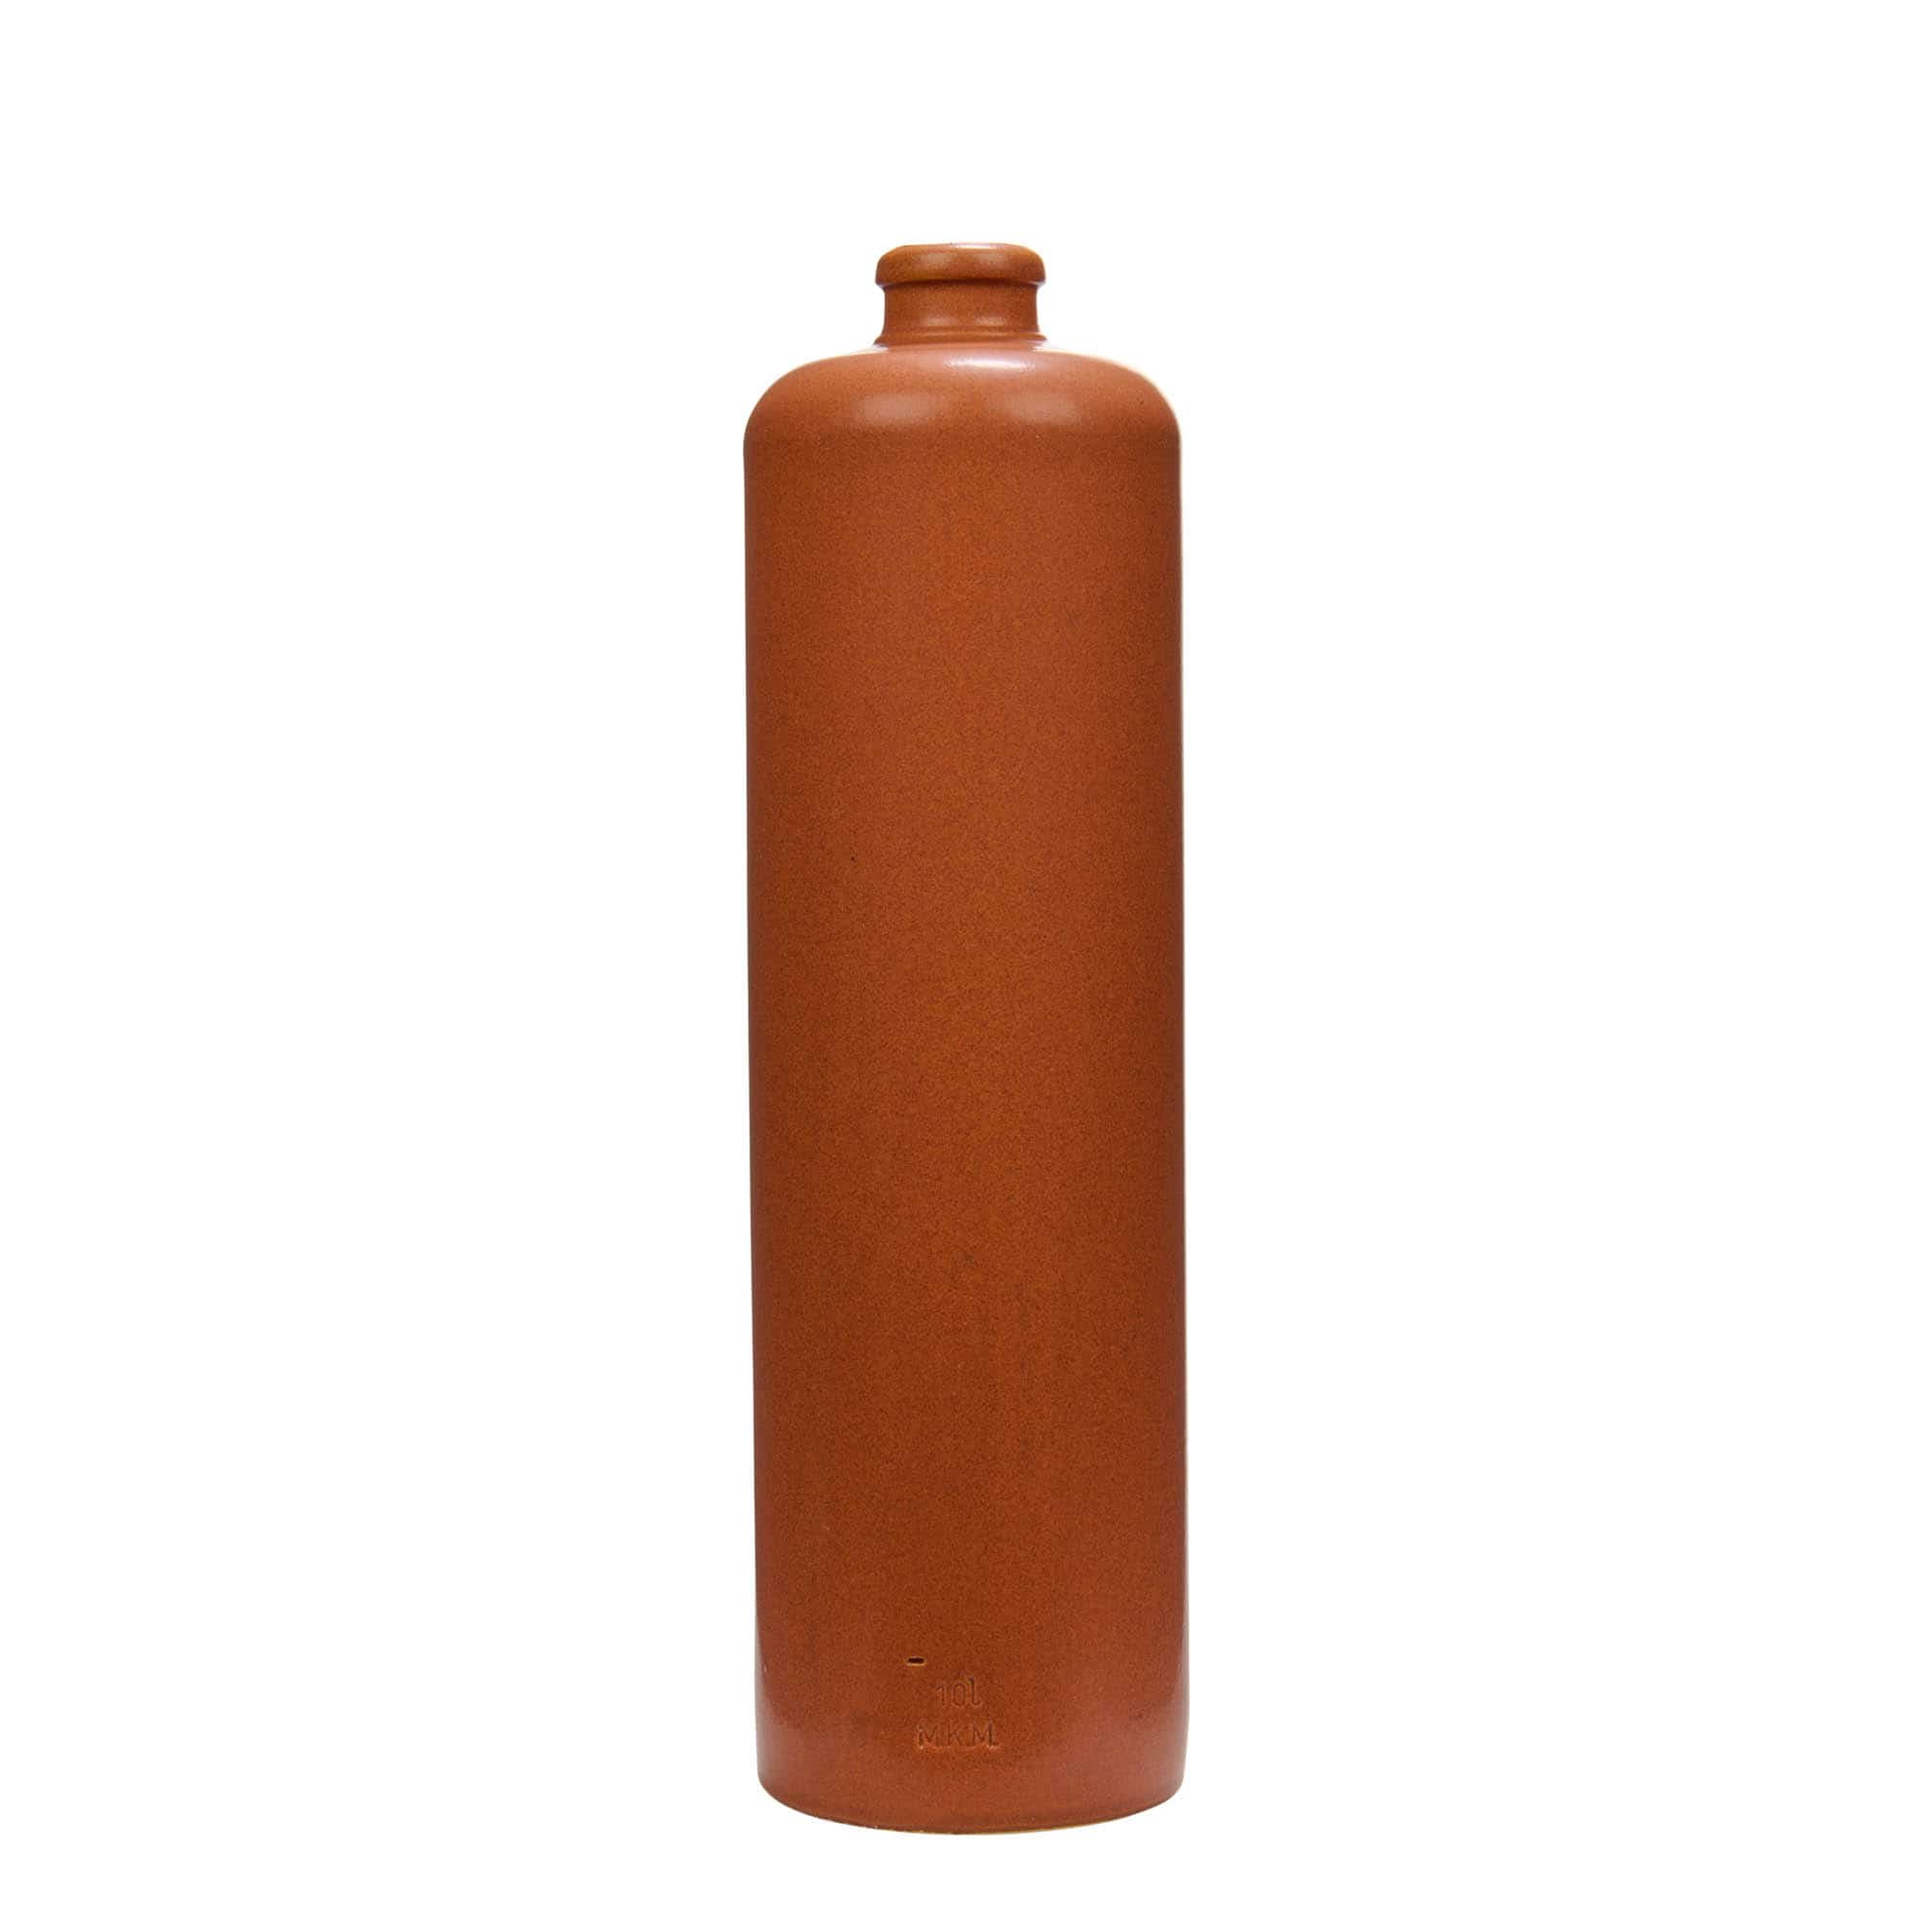 1,000 ml earthen jug, stoneware, red/brown, closure: cork